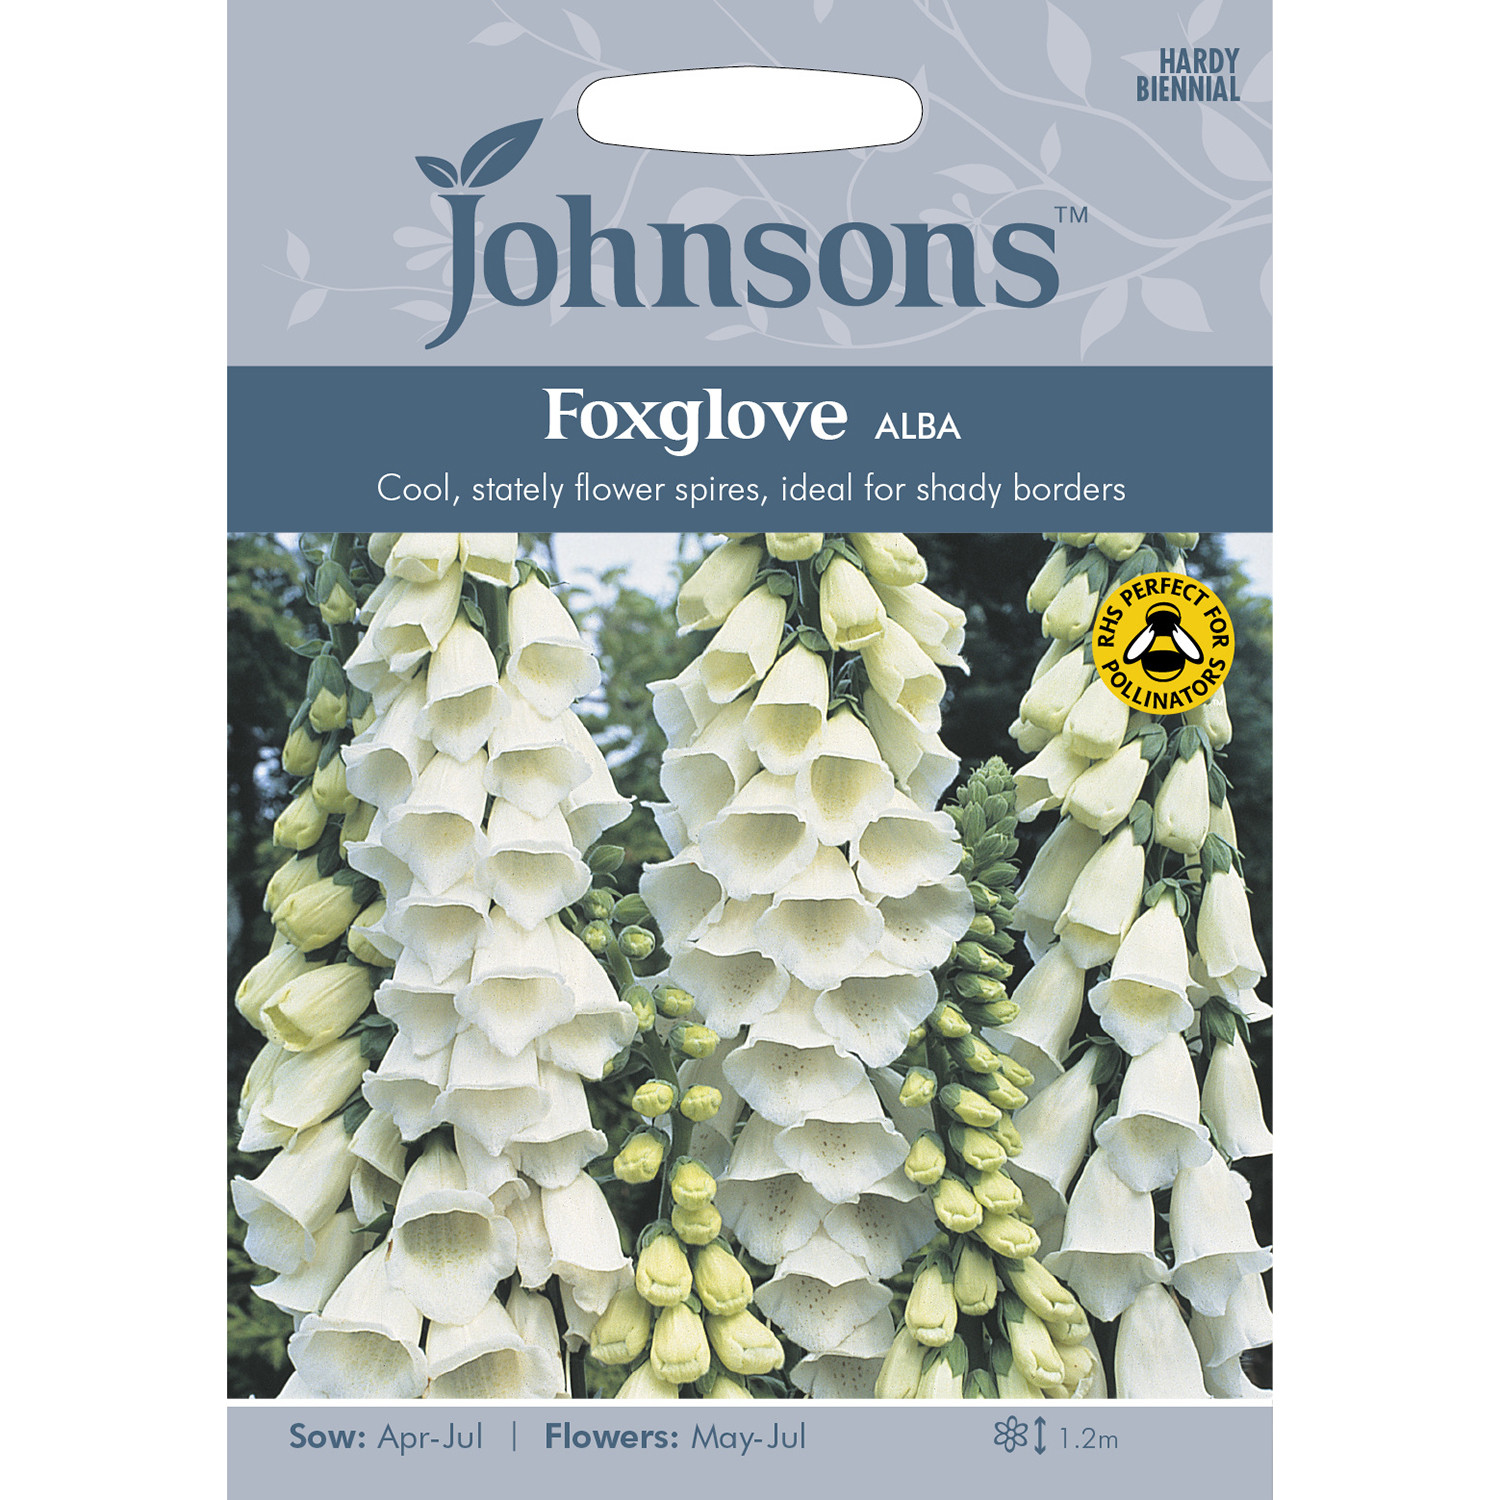 Johnsons Foxglove Alba Flower Seeds Image 2